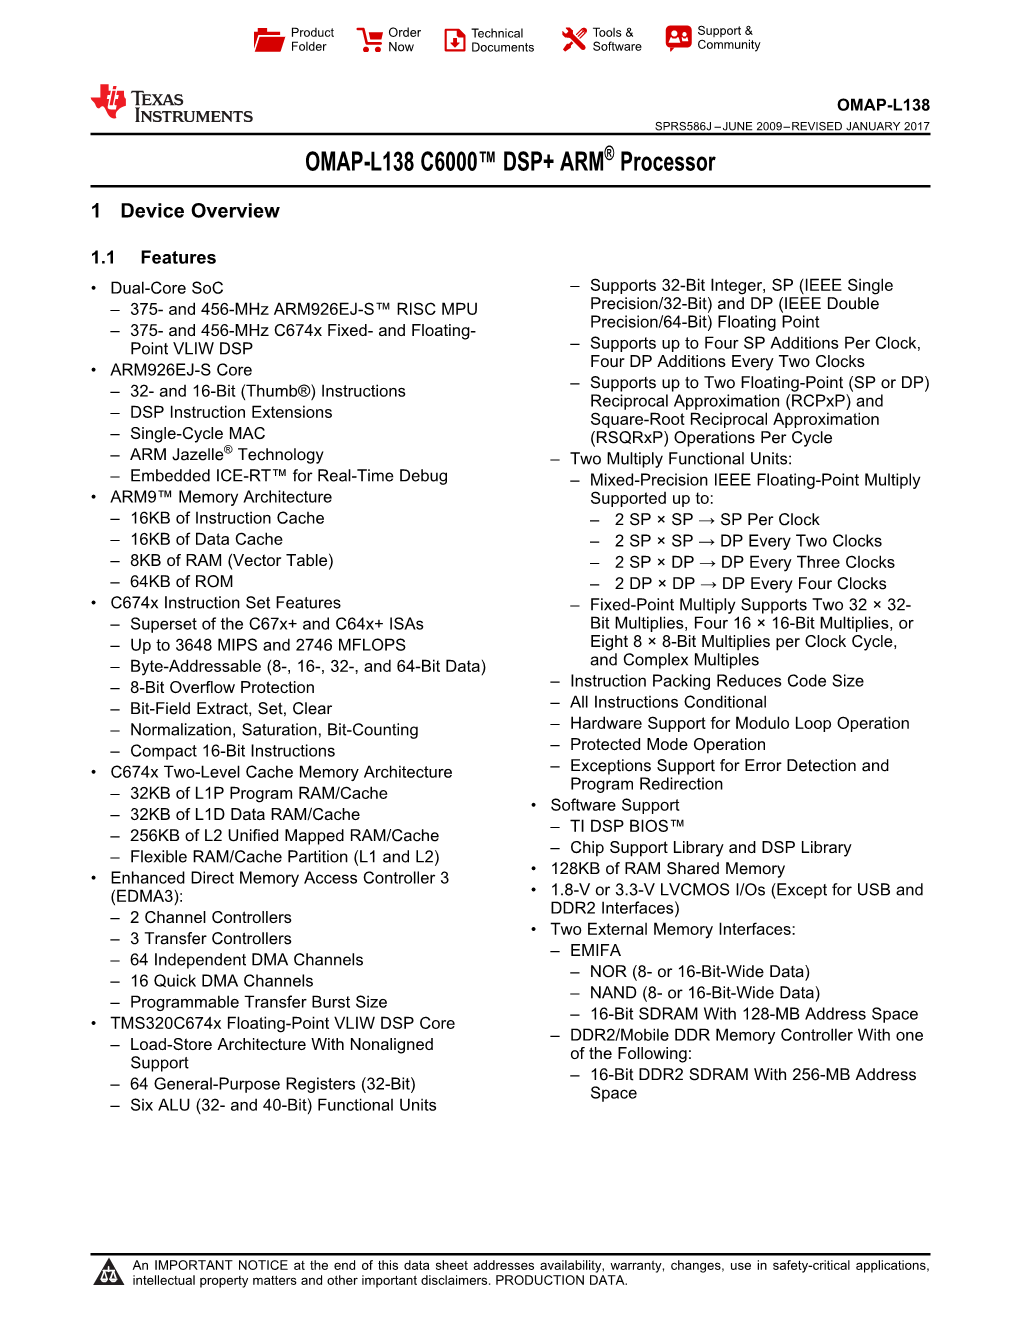 OMAP-L138 C6000 DSP+ARM Processor Datasheet (Rev. J)